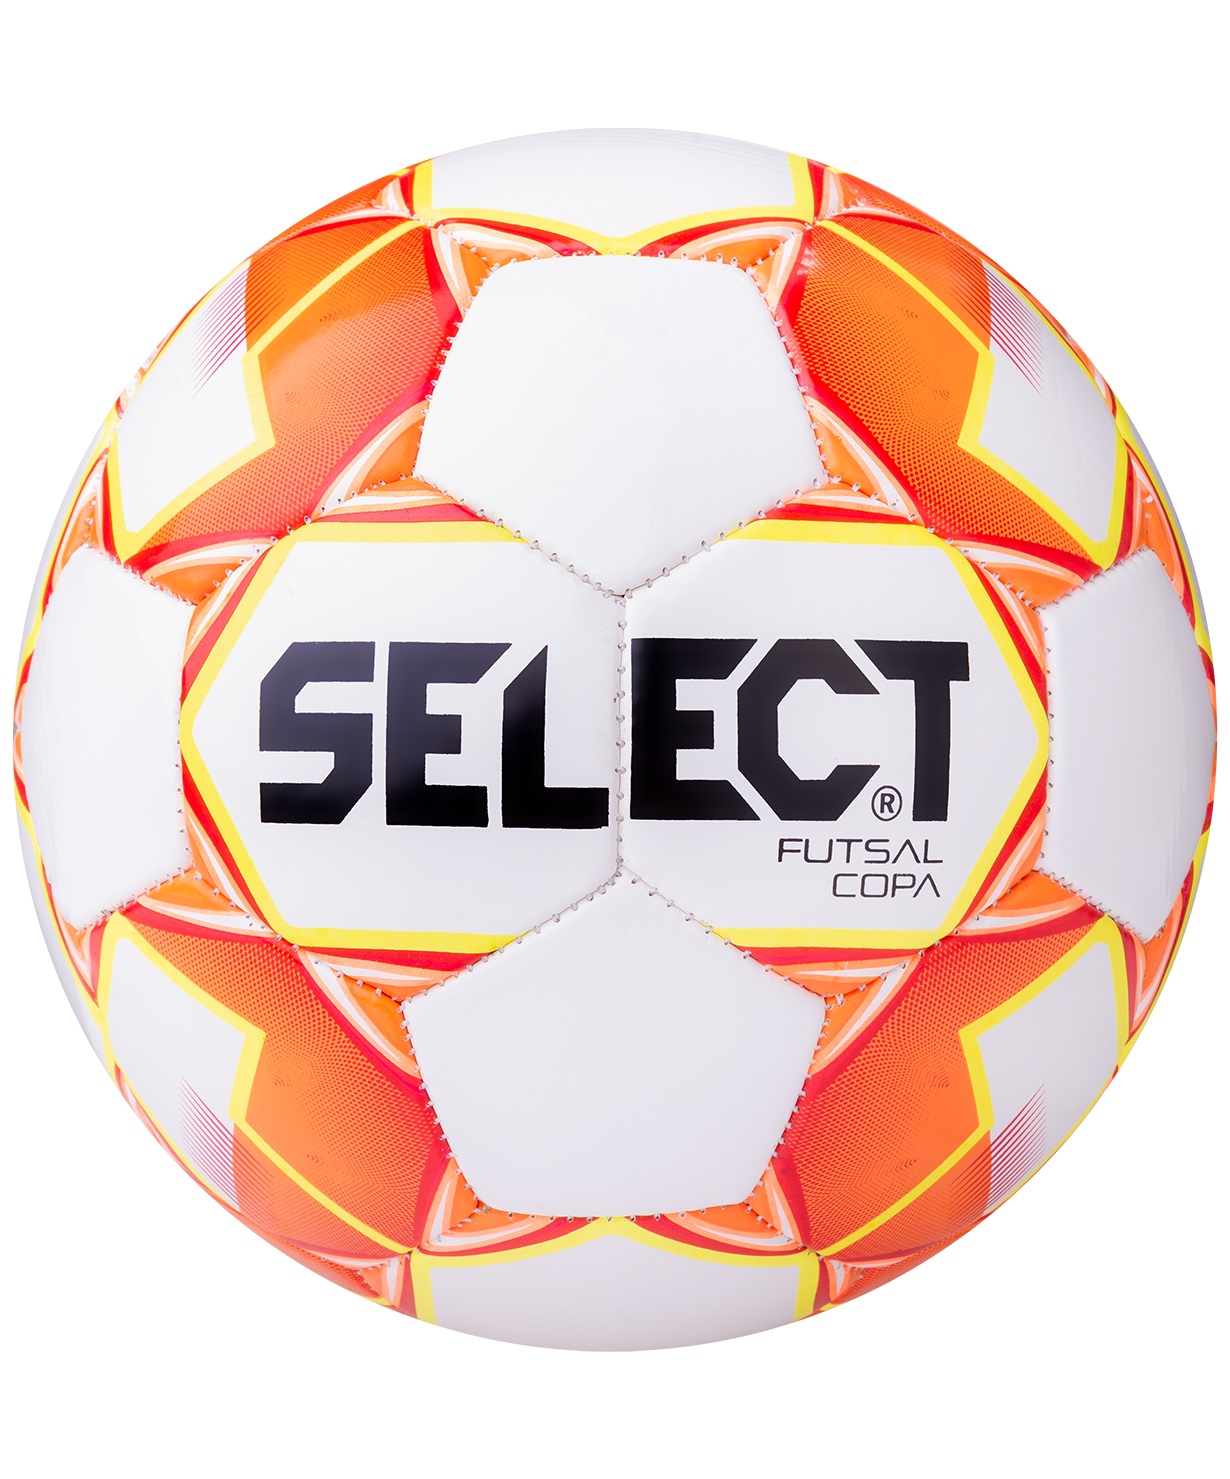 Футзальный мяч Select Futsal Copa №4 white/orange/yellow